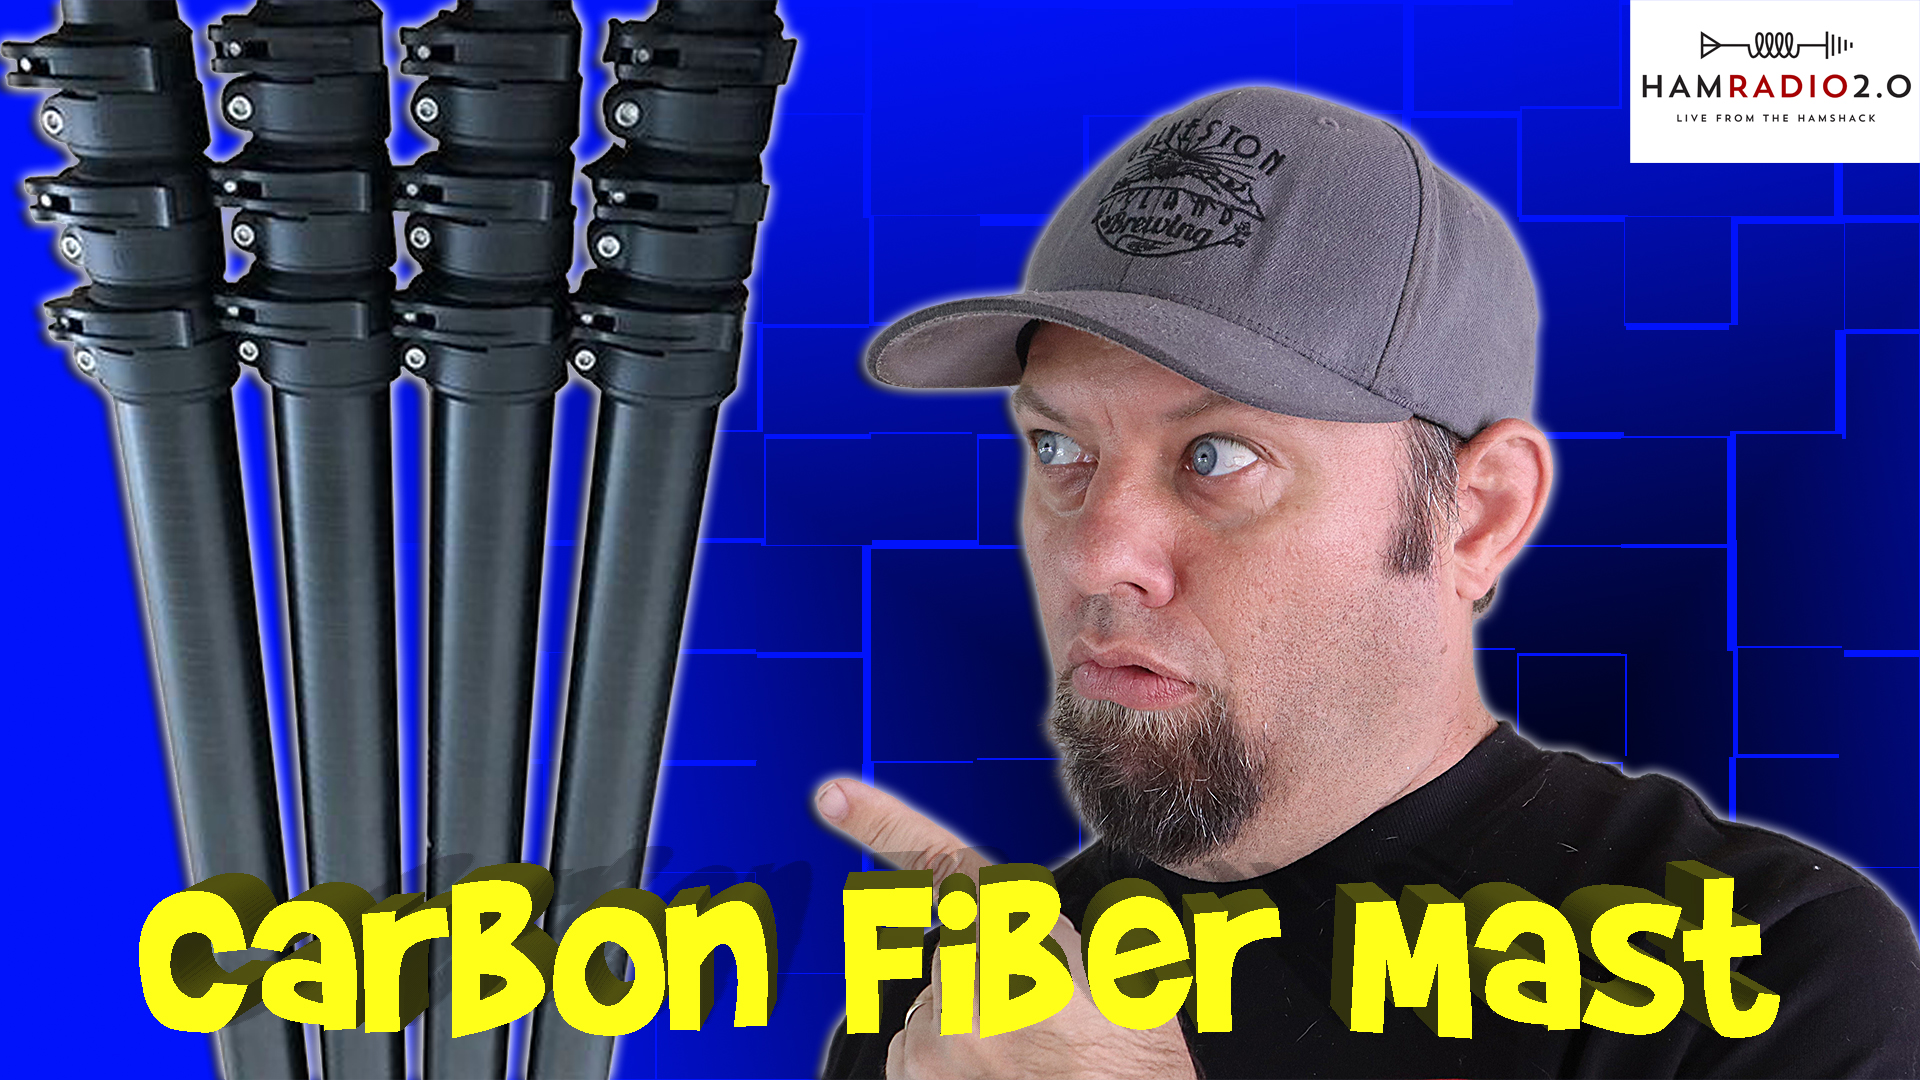 Episode 412: Carbon Fiber Mast for Ham Radio Antennas from Gigaparts! | HF Antenna Mast